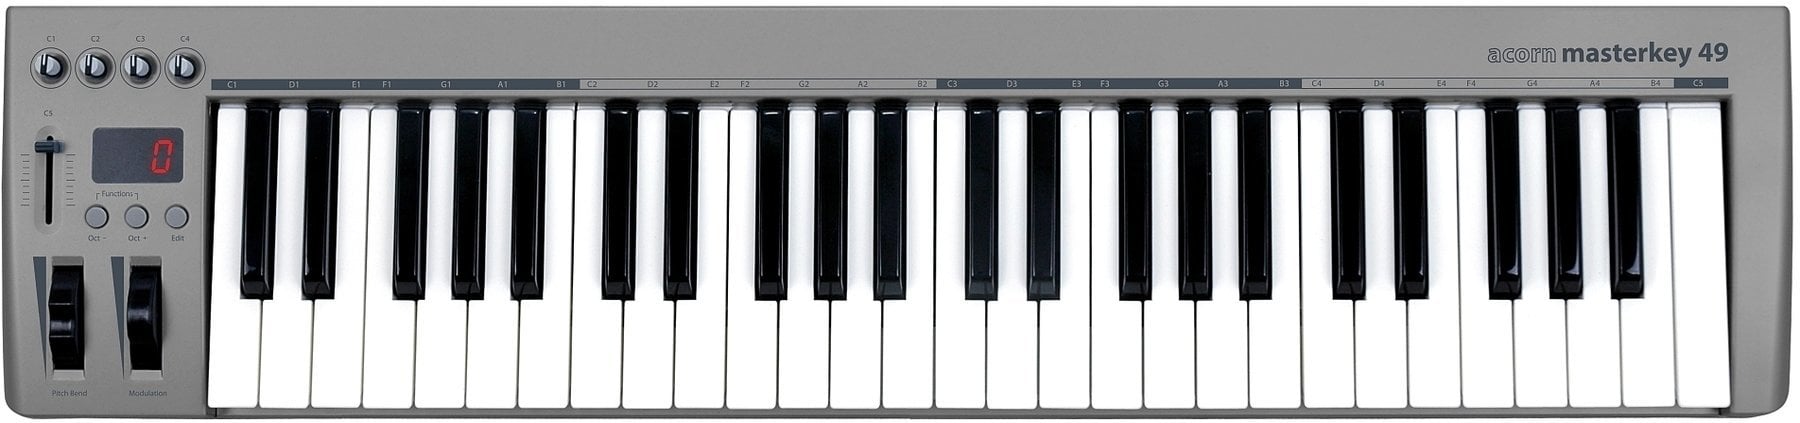 MIDI-Keyboard Acorn Masterkey-49